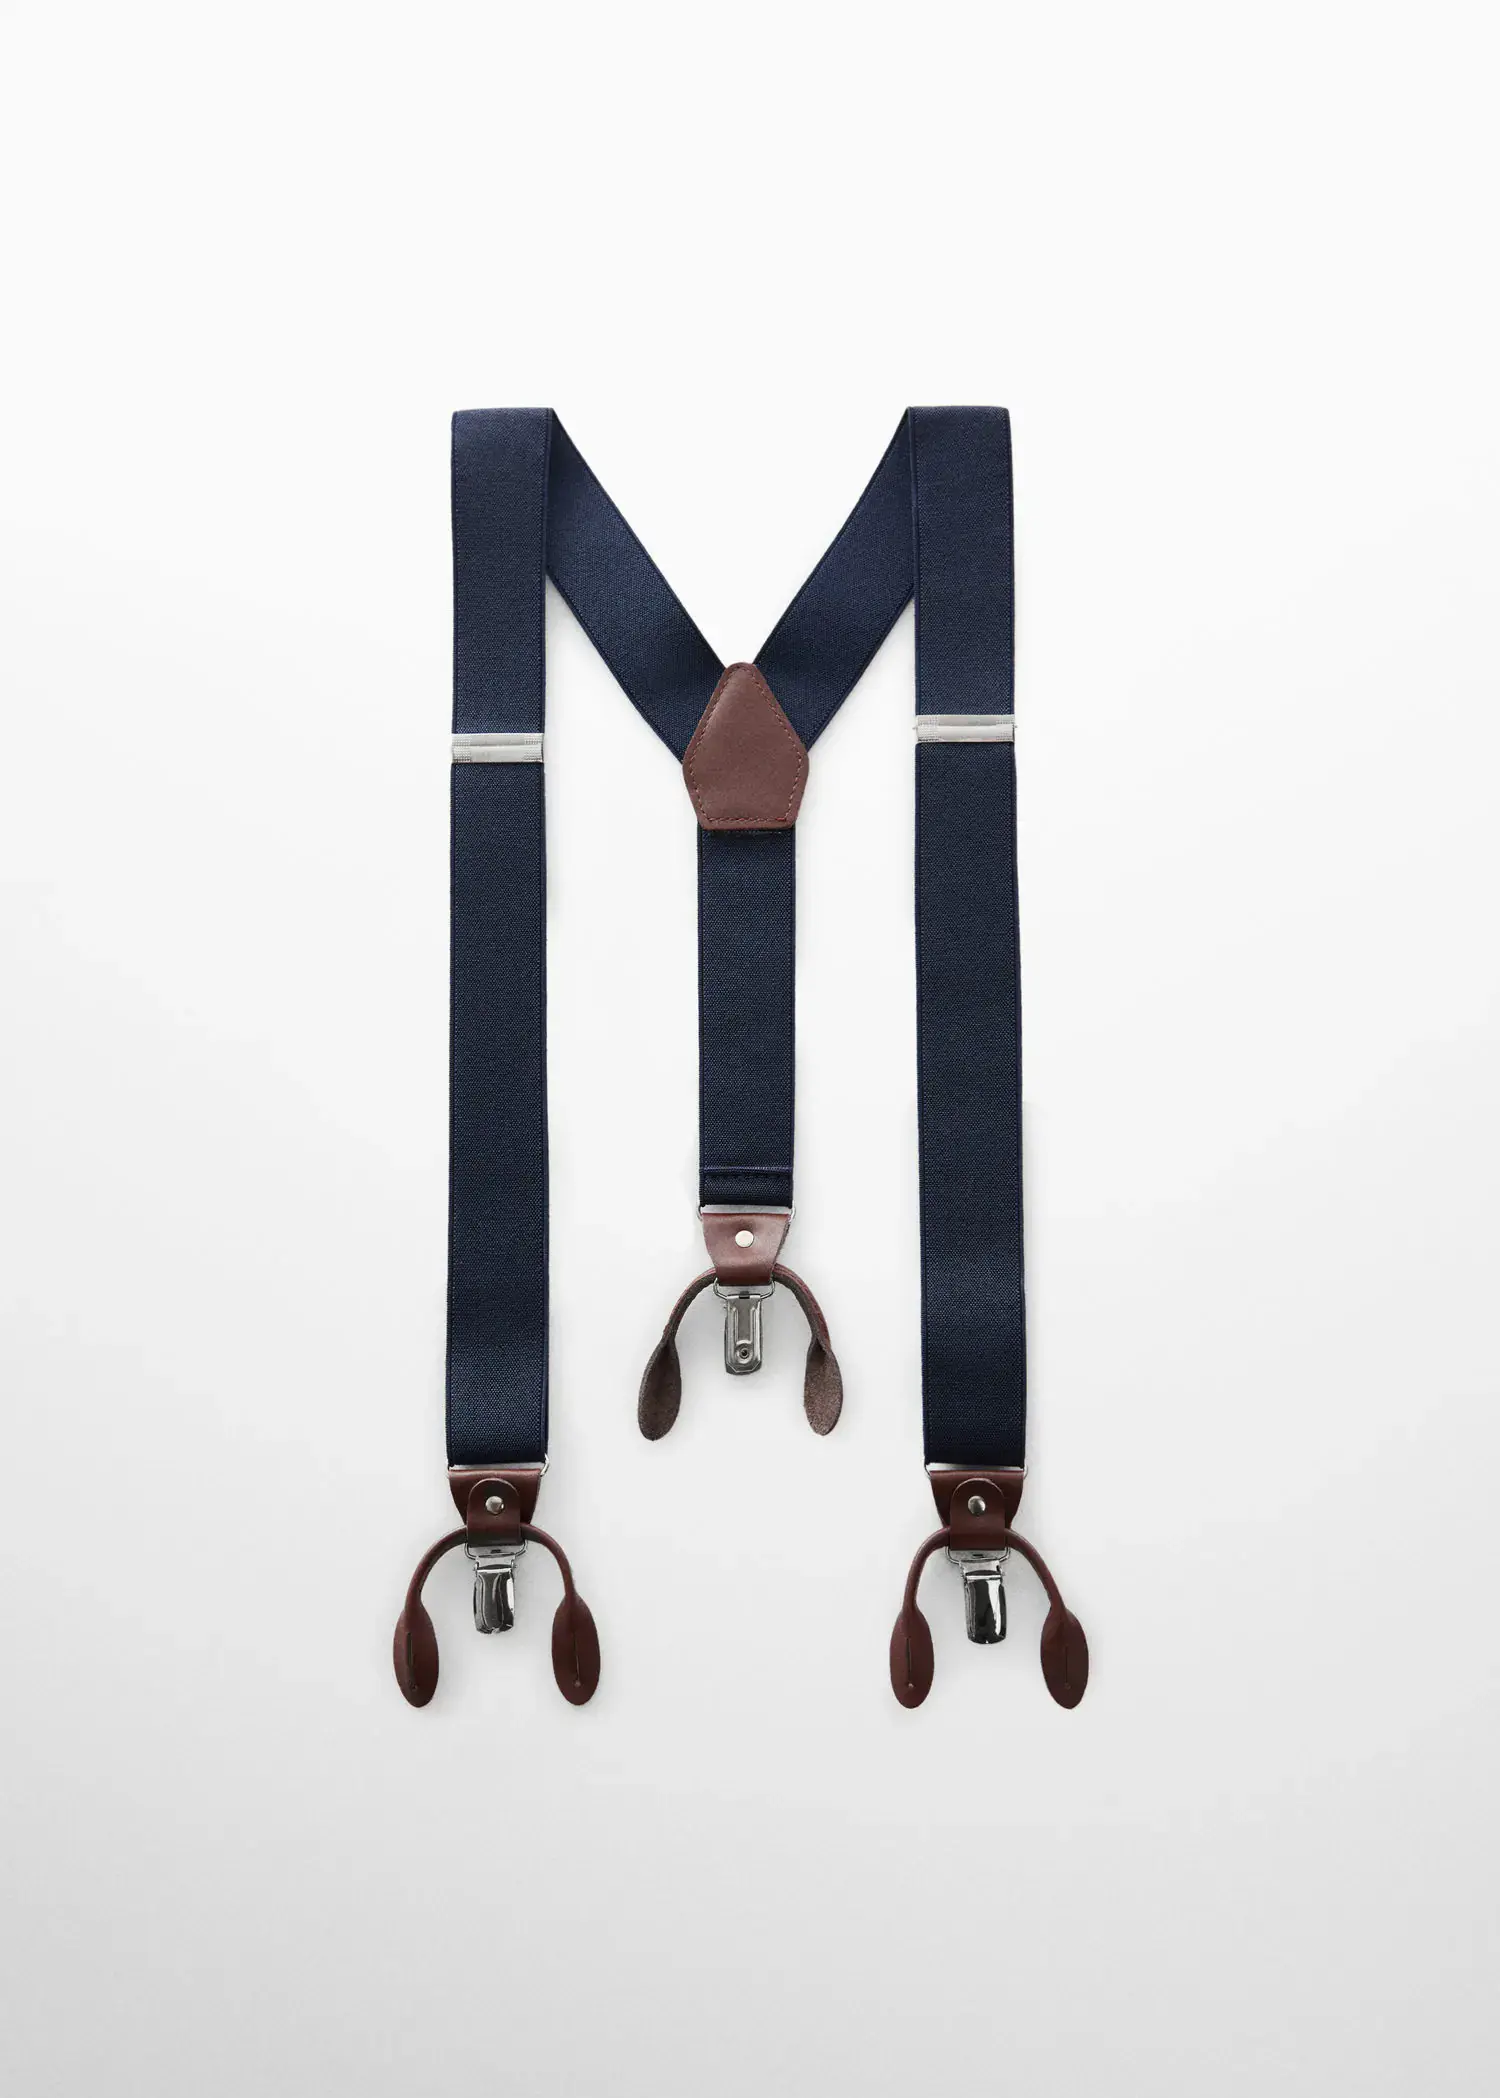 Mango Adjustable elastic straps with leather details. 1